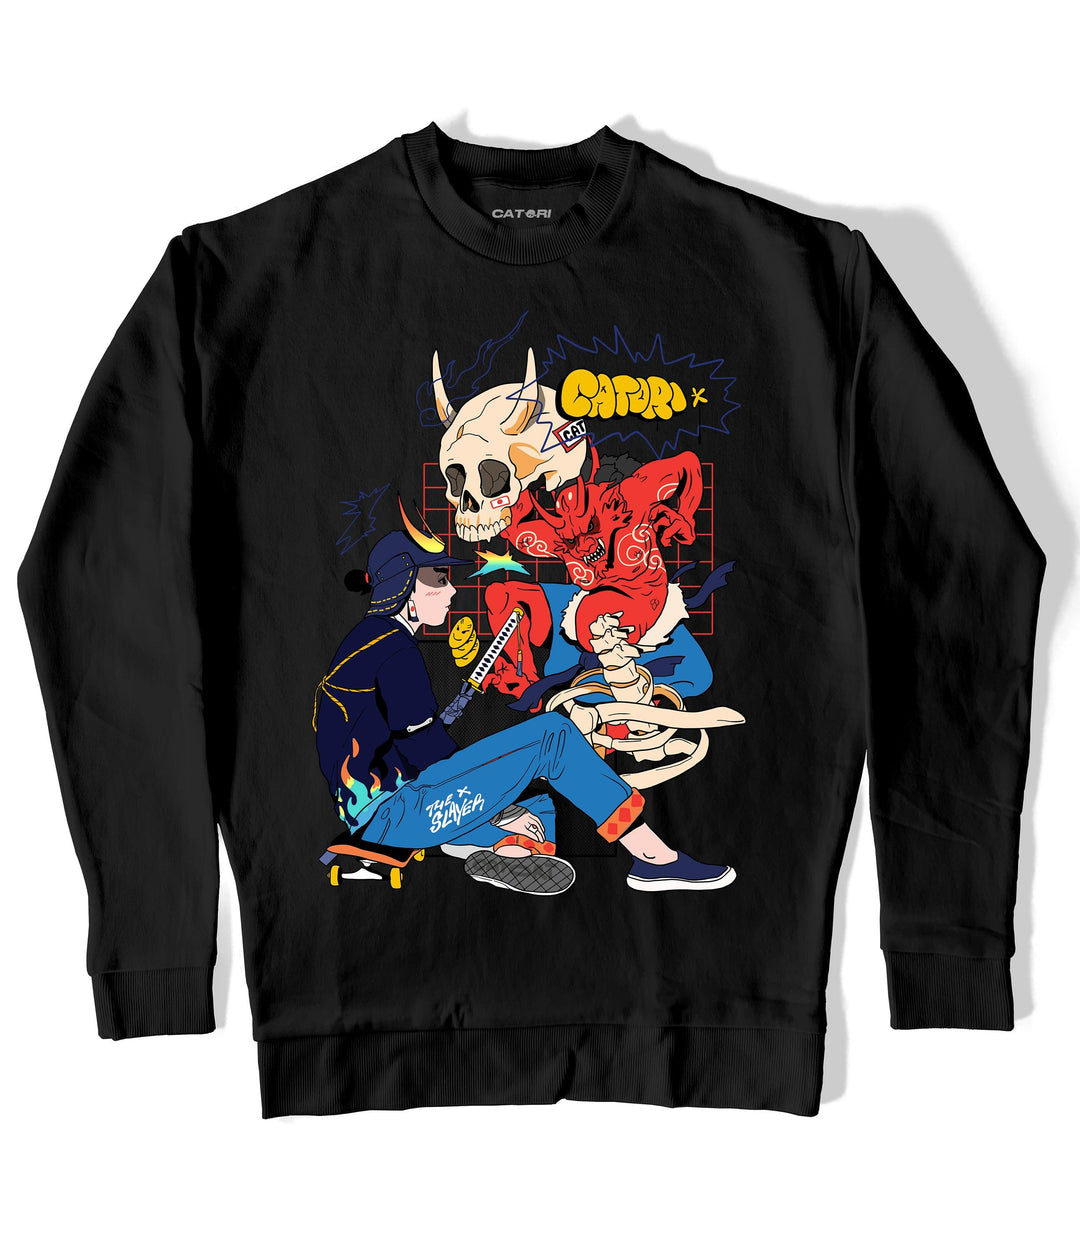 The Slayer Sweatshirt at Catori Clothing | Graphic & Anime Tees, Hoodies & Sweatshirts 